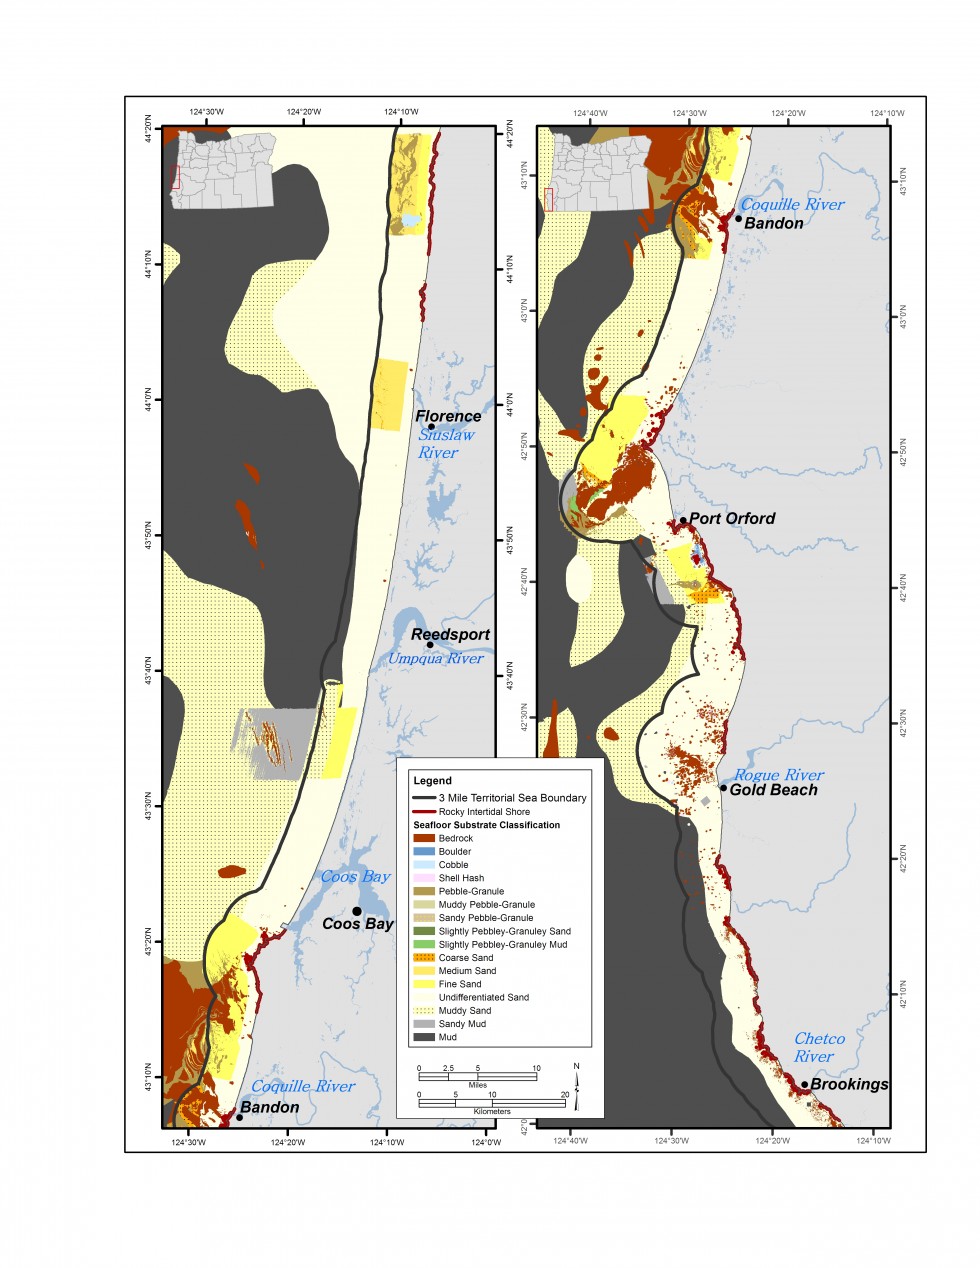 South Oregon coast marine system bottom substrates